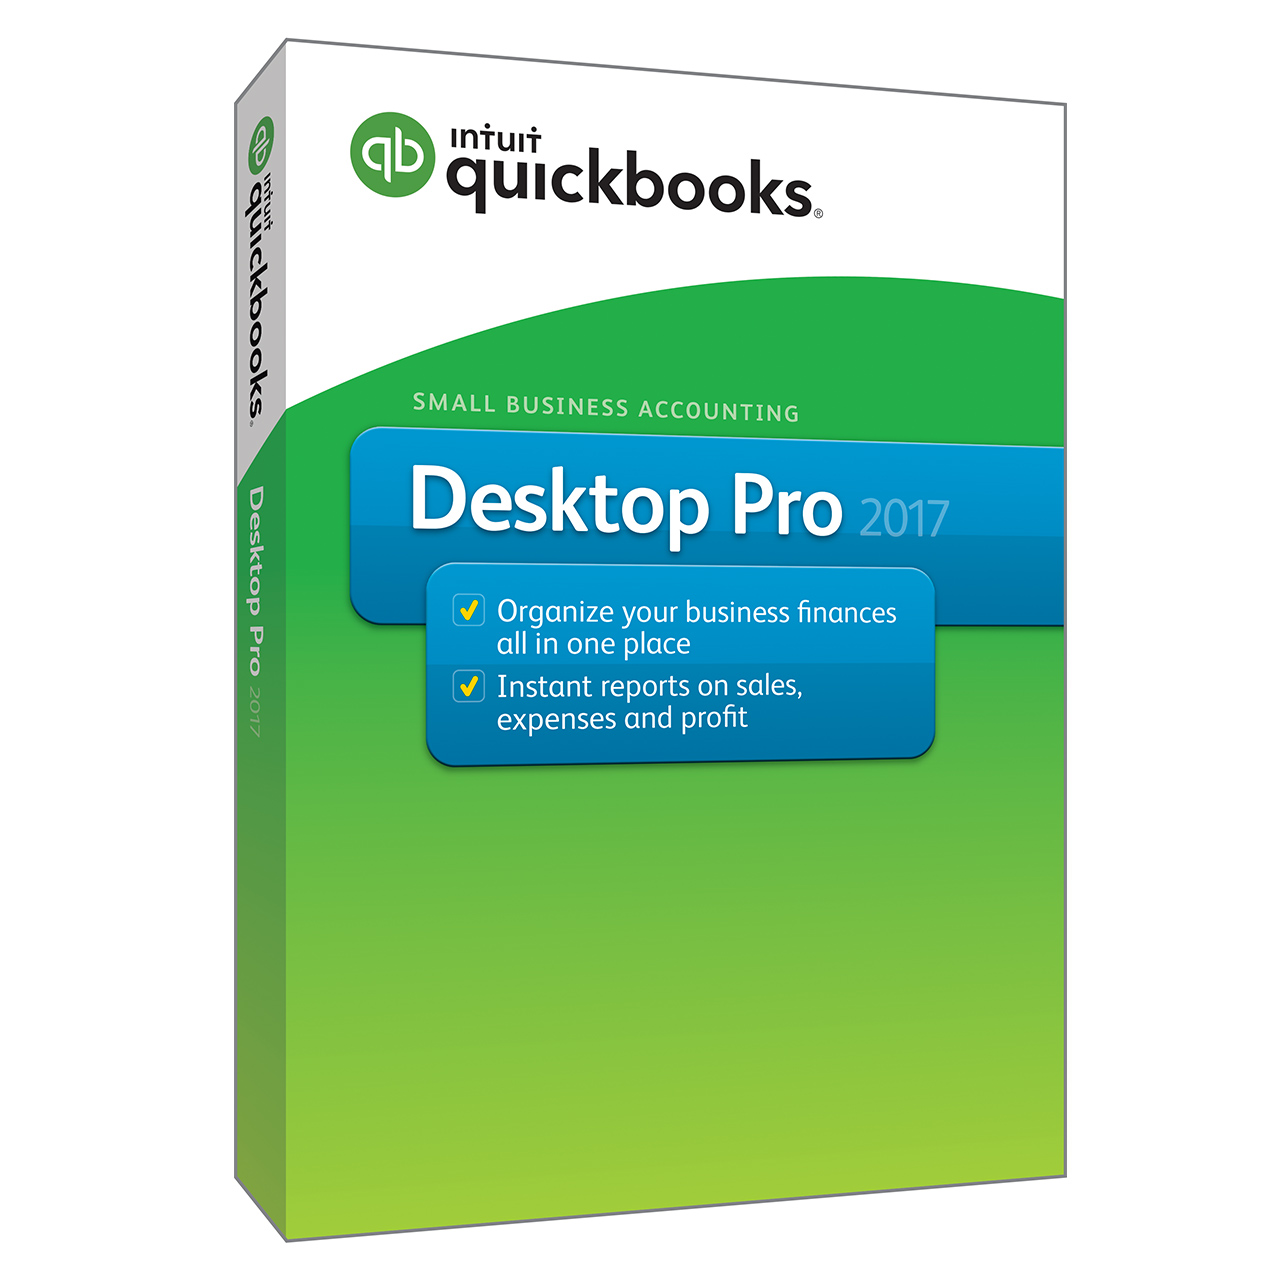 need toquickbooks desktop pro on my new computer